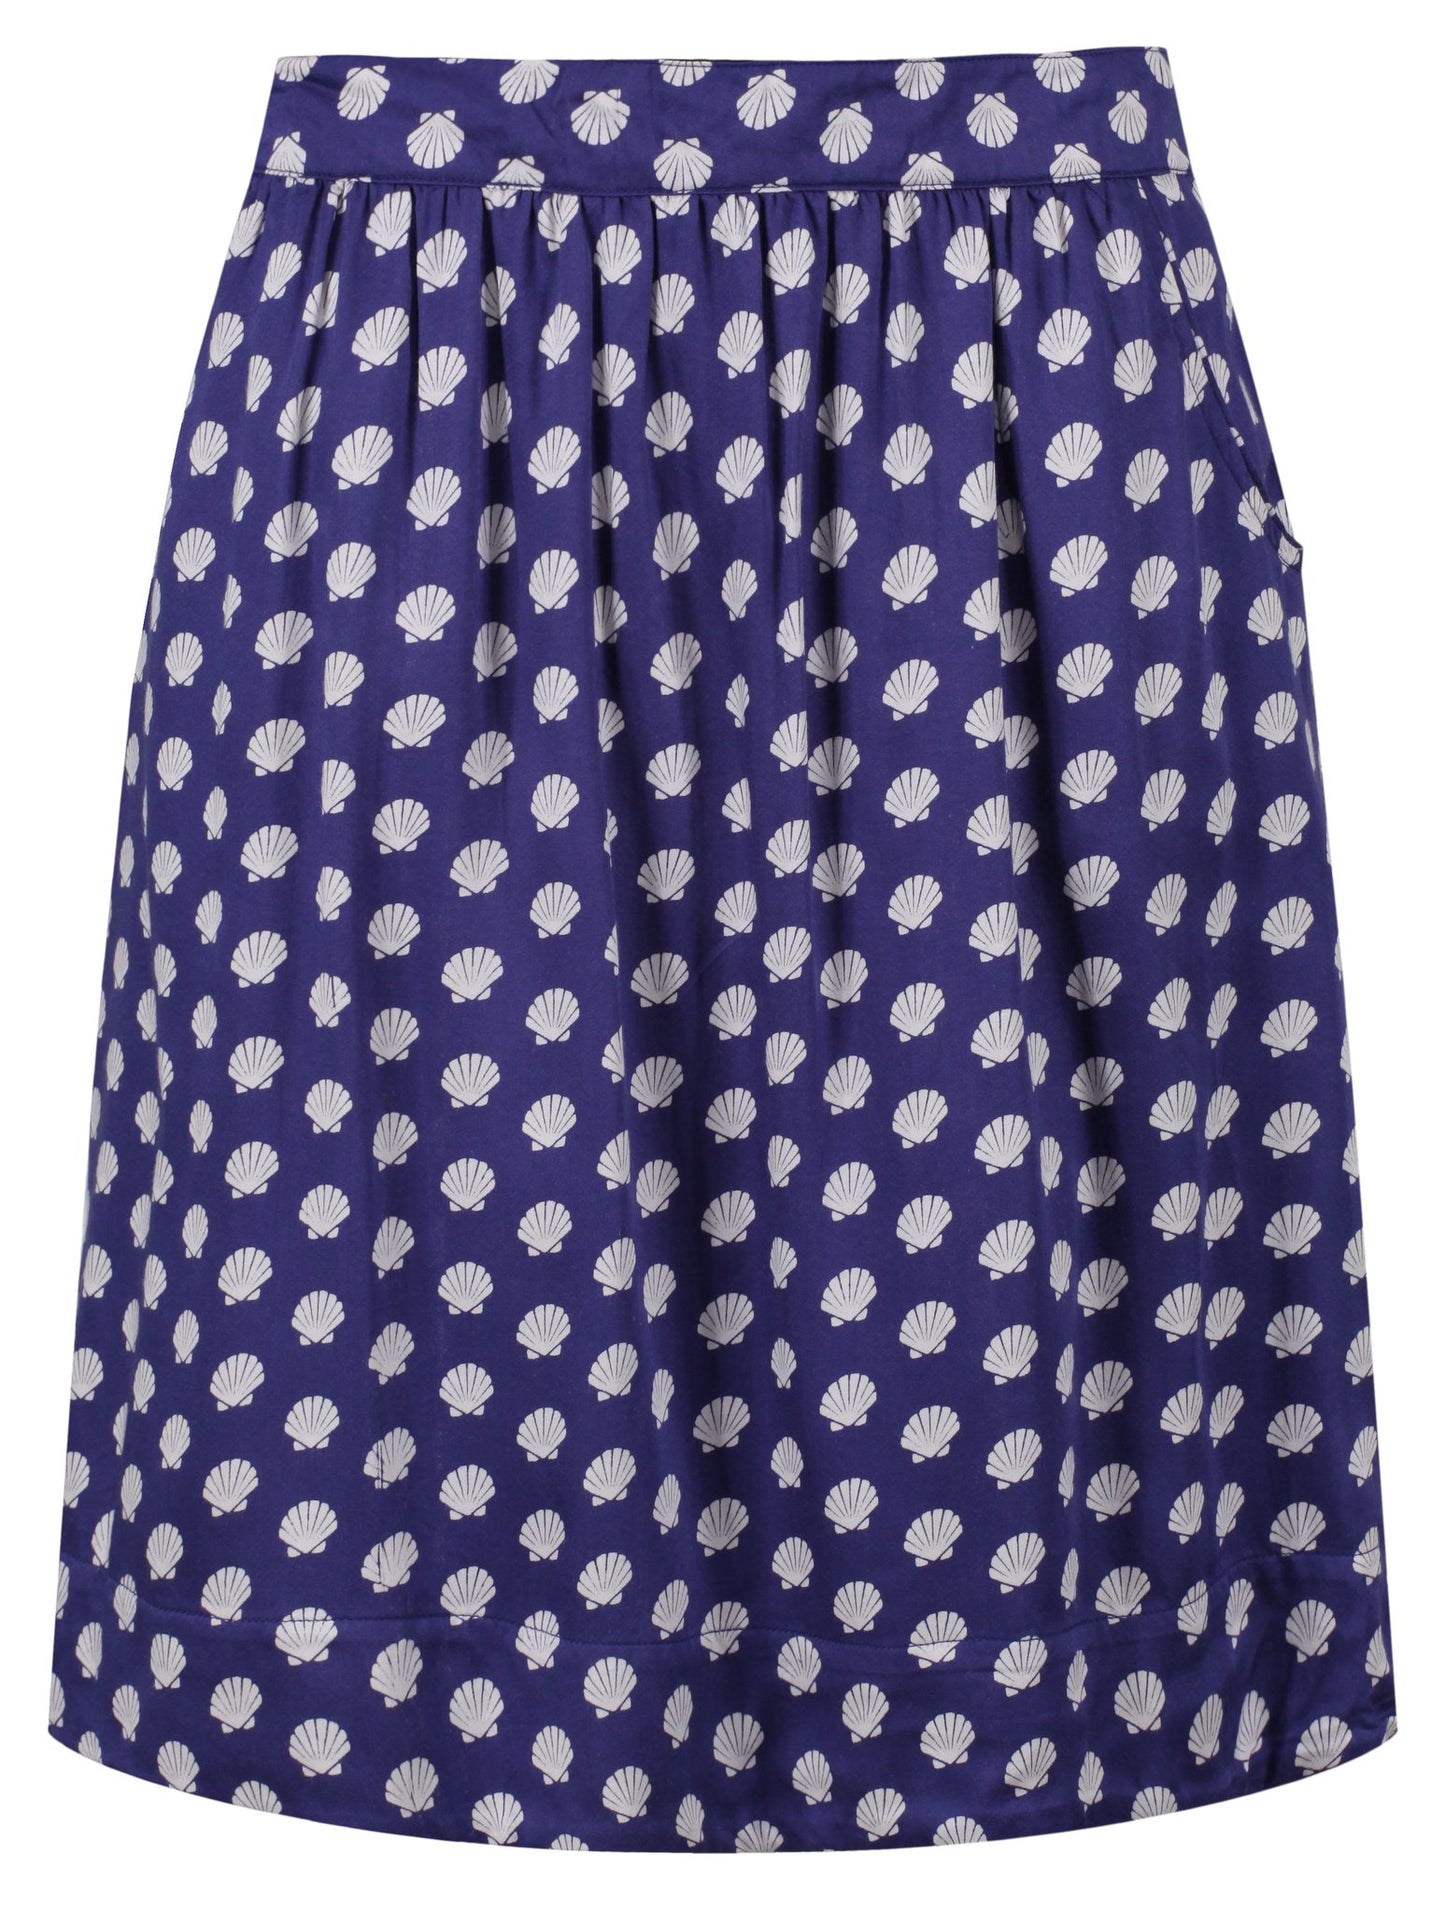 Mudd & Water Womens 'City Skirt' - Blue Shell Print